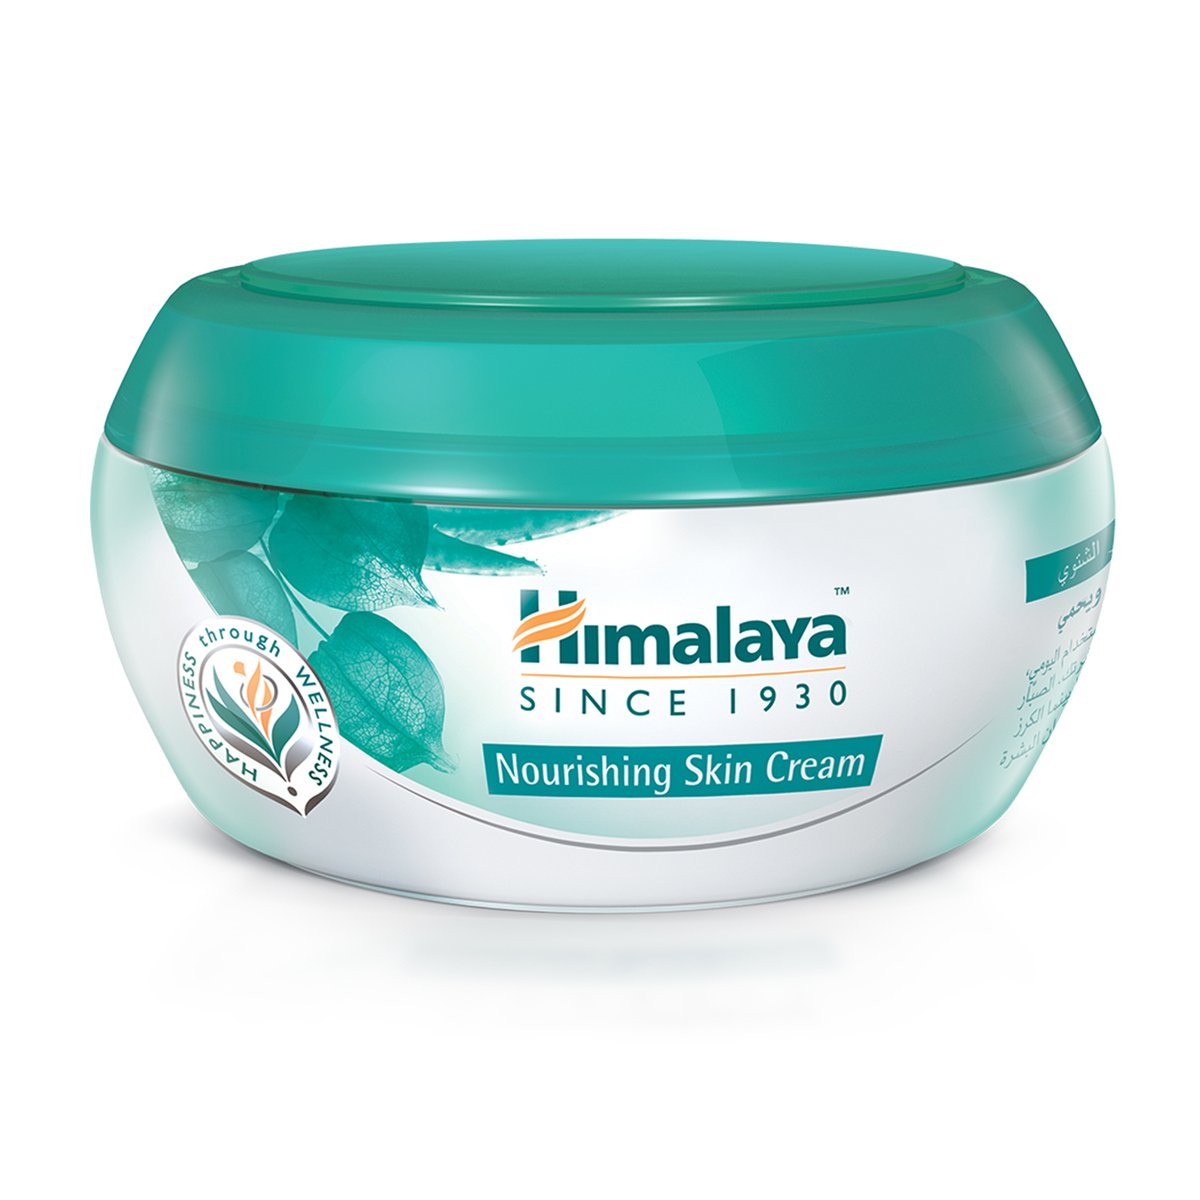 Himalaya Nourishing Skin Cream 150 ml